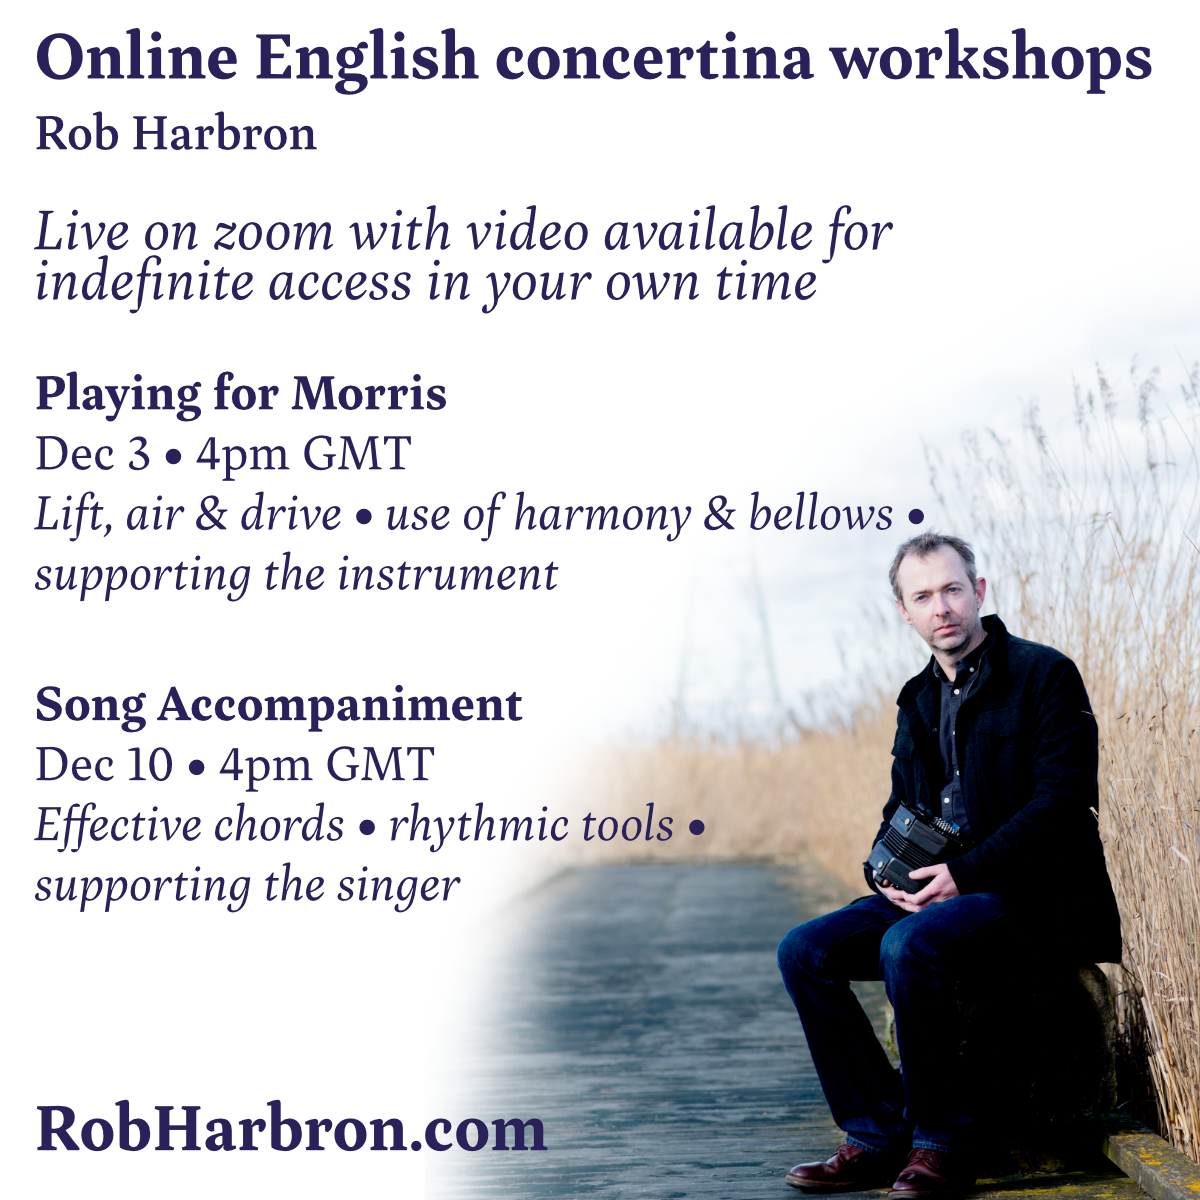 Online English concertina workshop - Song Accompaniment